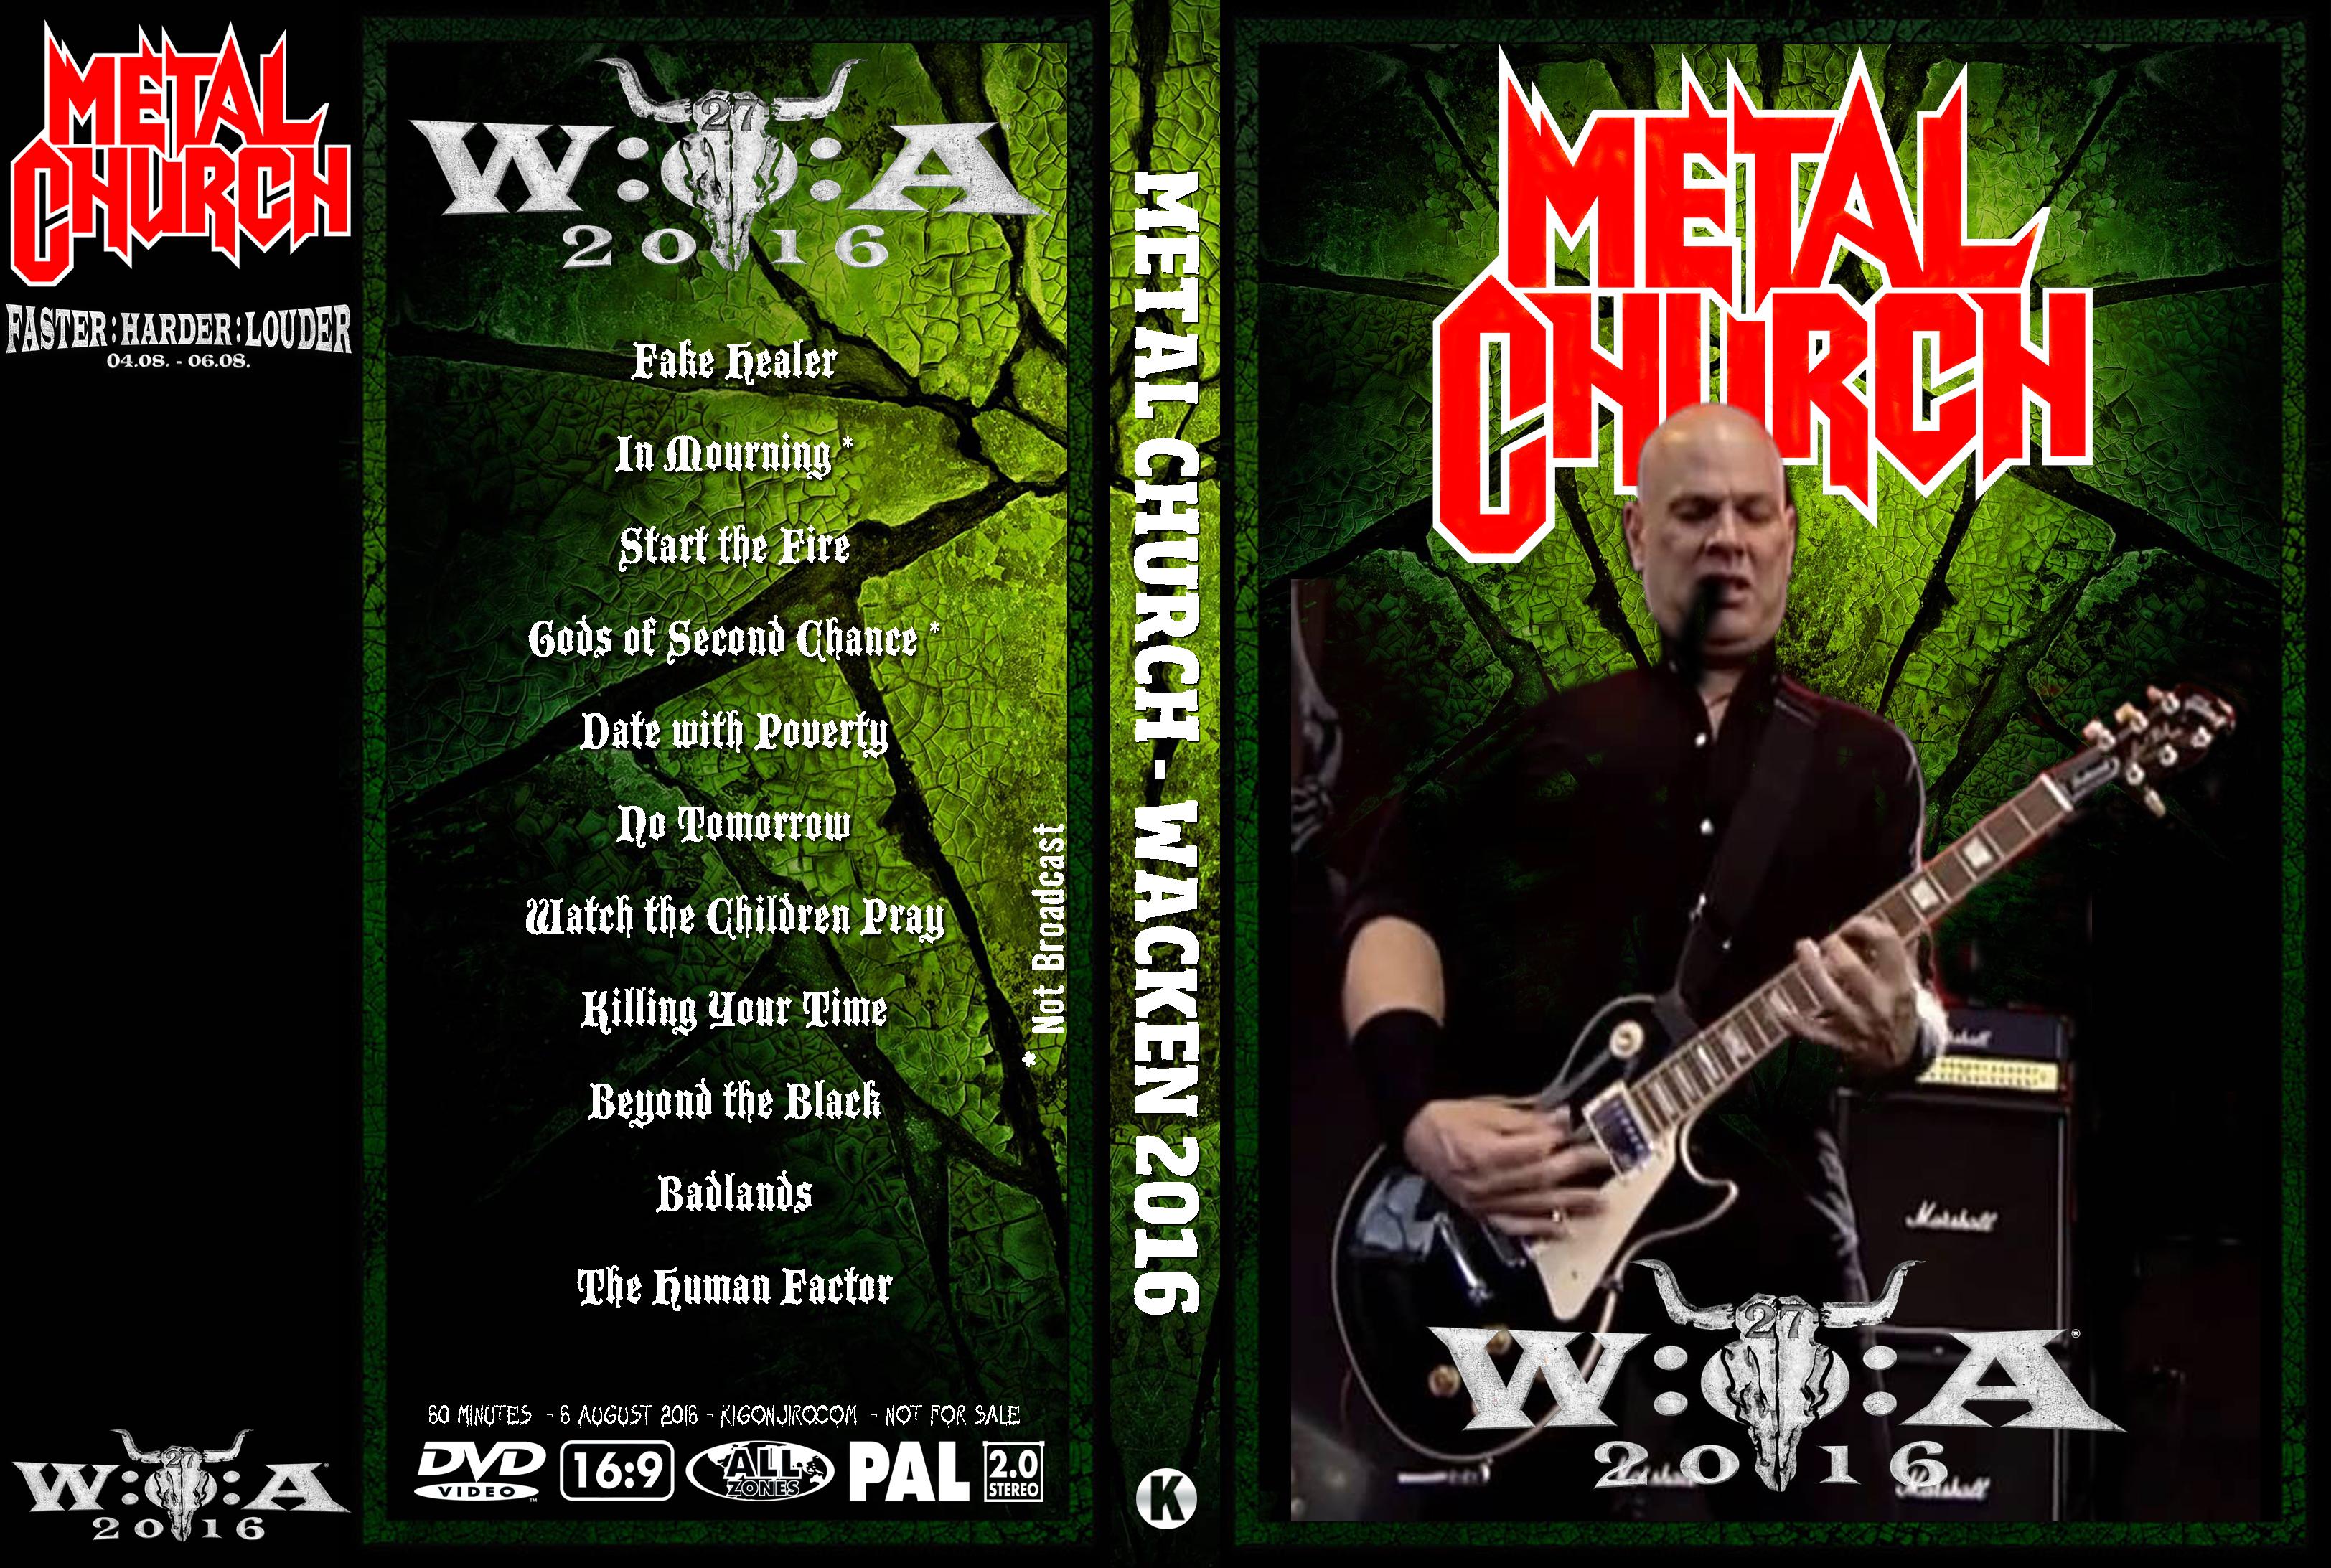 Harder louder. Metal Church the Human Factor. Дэвид Уэйн Metal Church. Metal Church the Dark Full альбом.